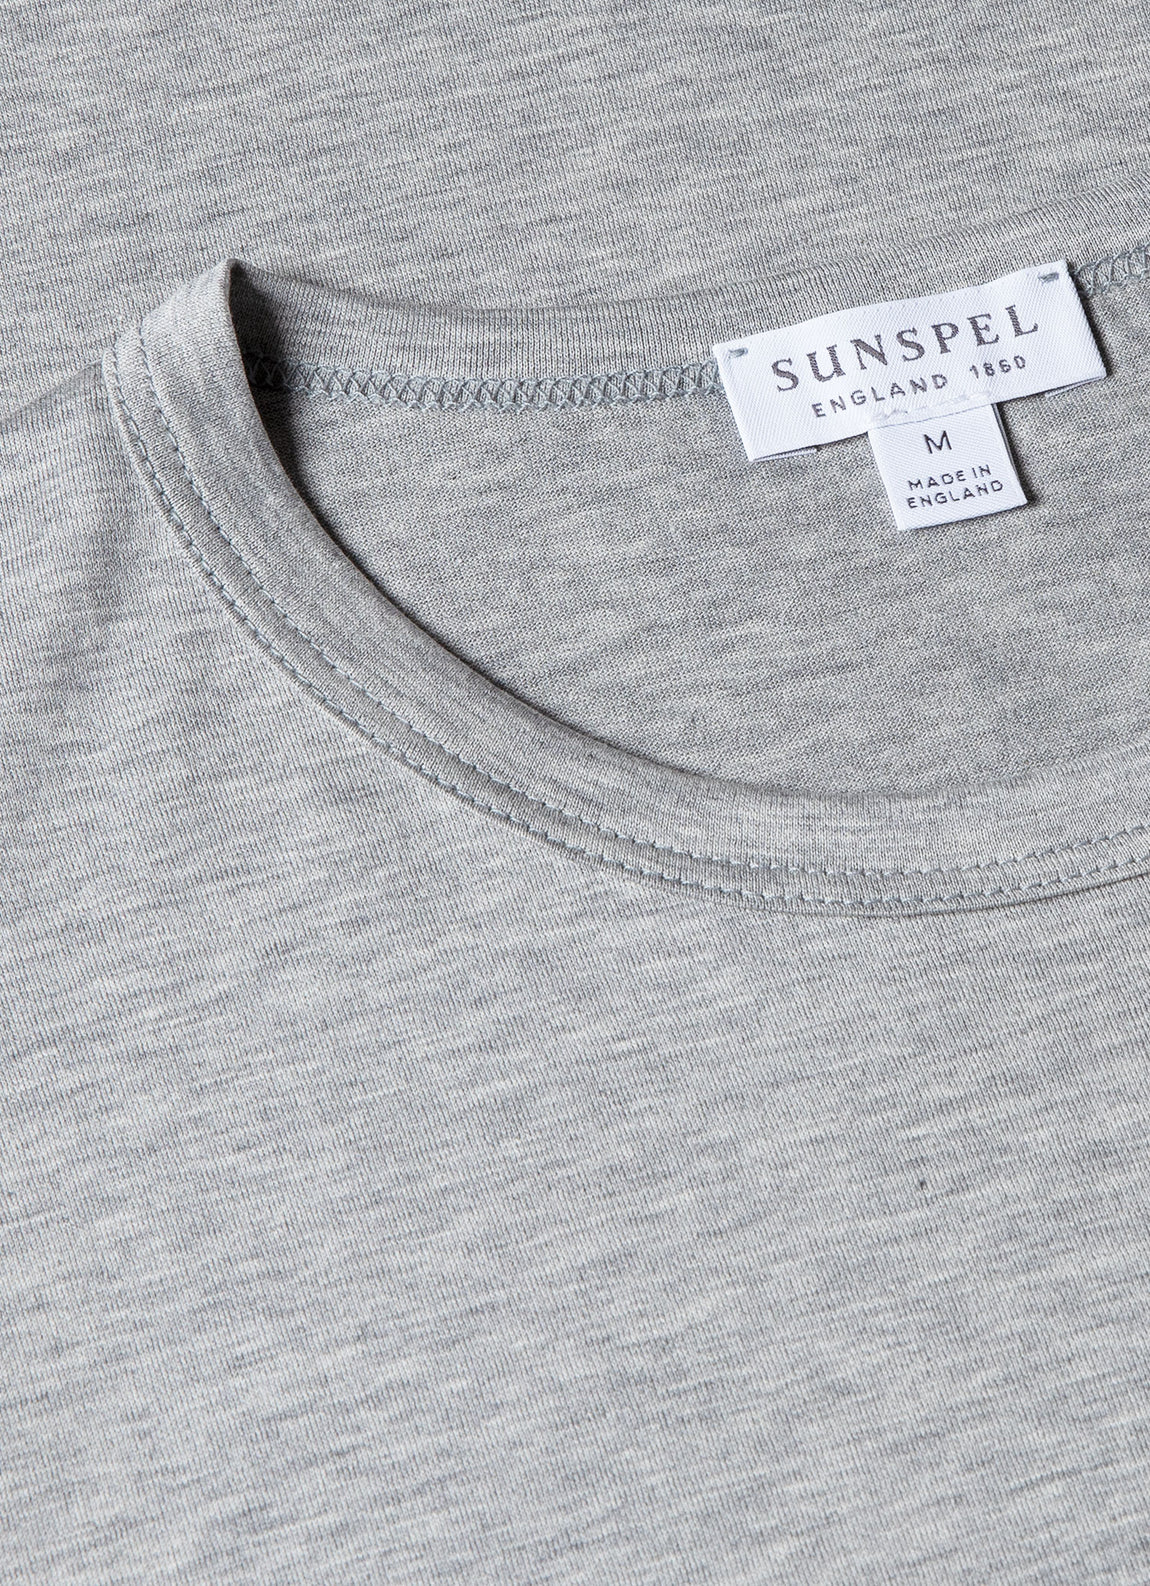 Men's Classic T-shirt in Grey Melange | Sunspel